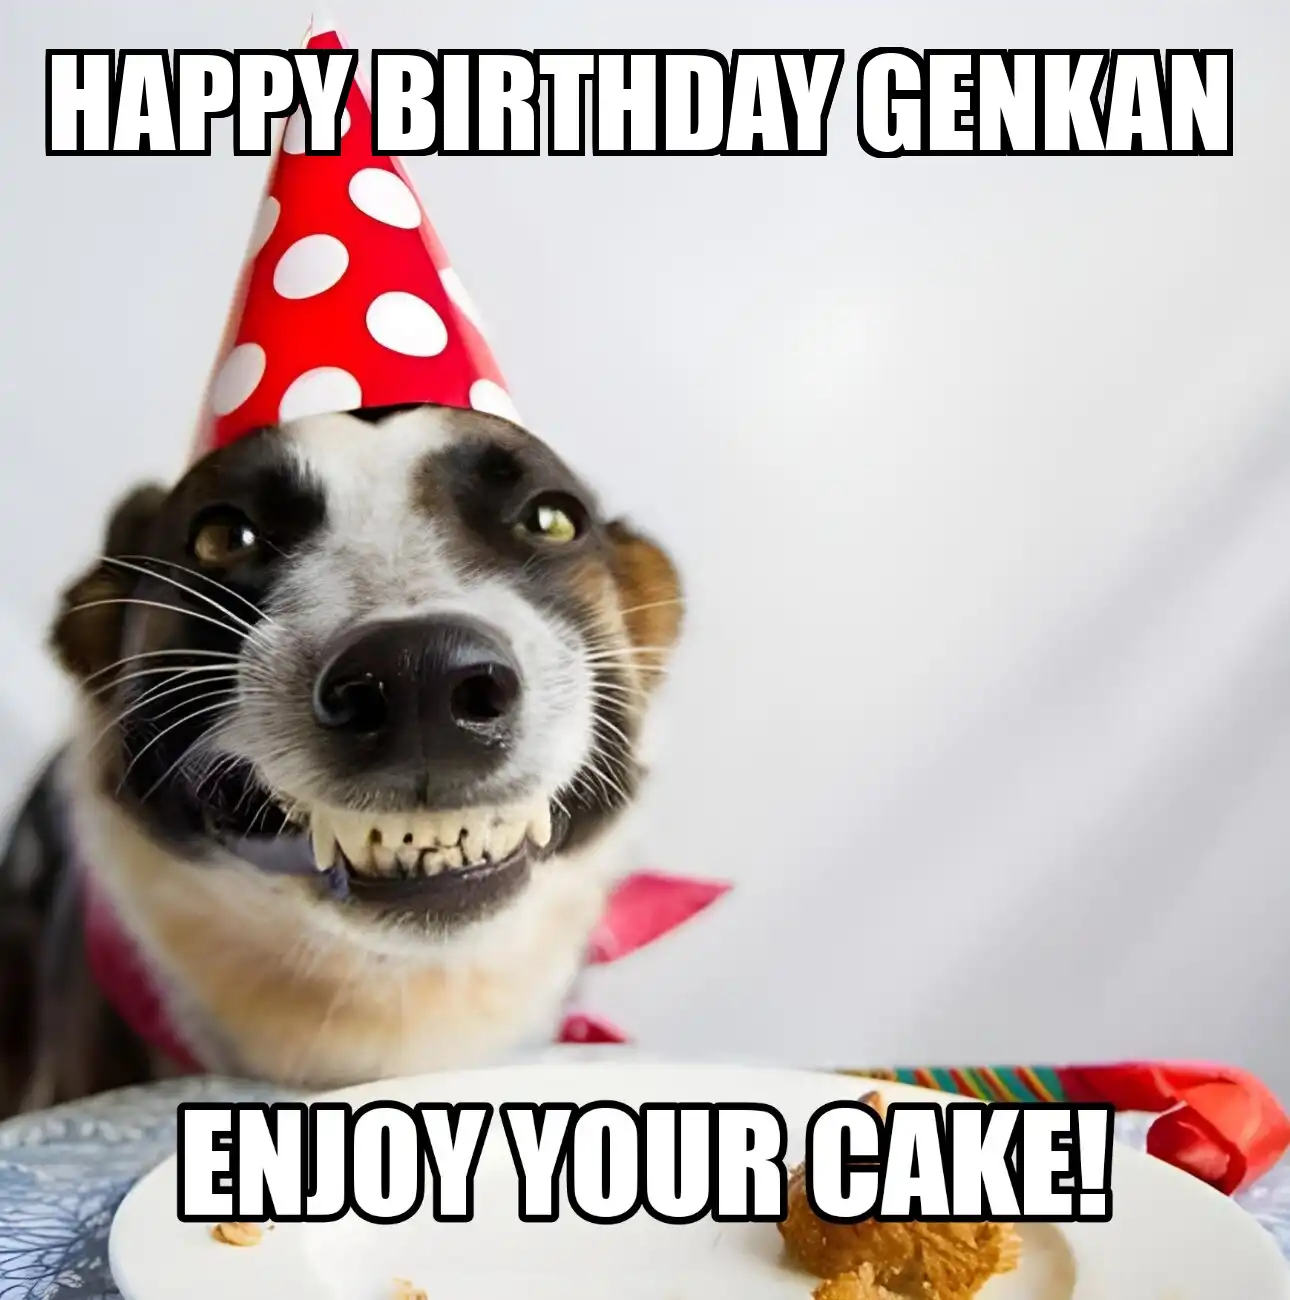 Happy Birthday Genkan Enjoy Your Cake Dog Meme